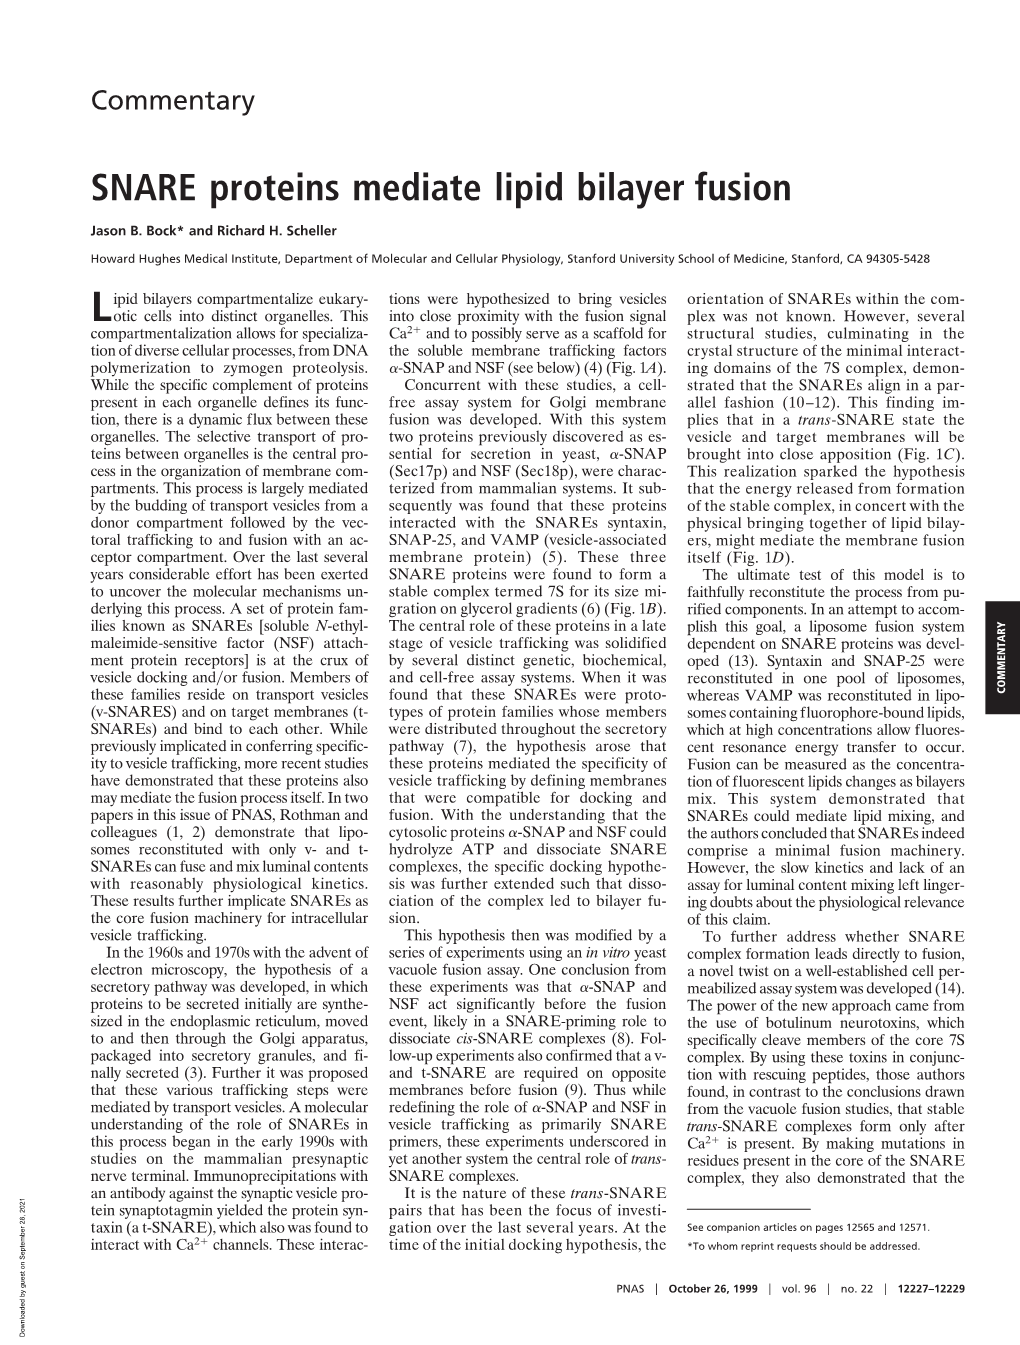 SNARE Proteins Mediate Lipid Bilayer Fusion